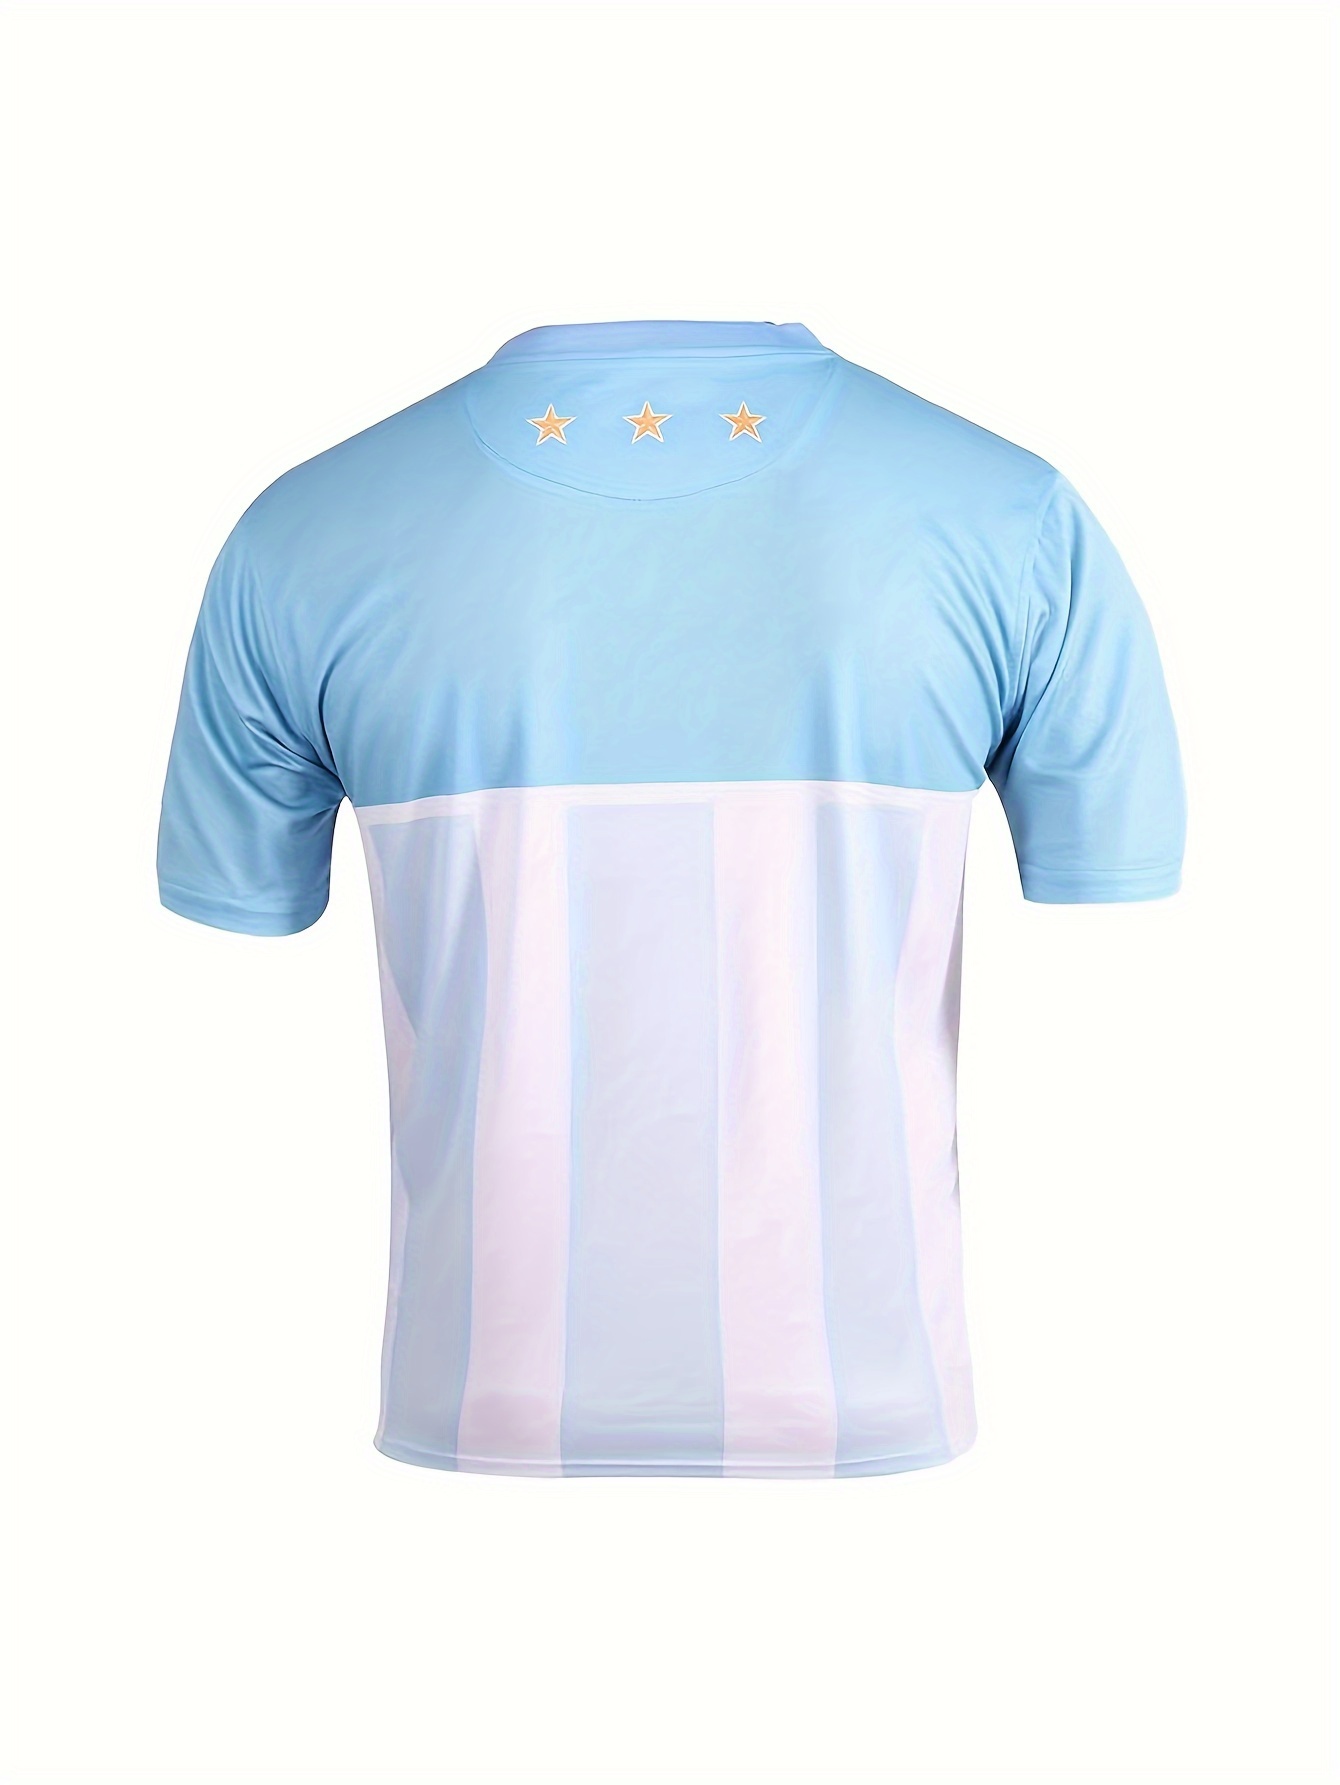 argentina soccer jersey men